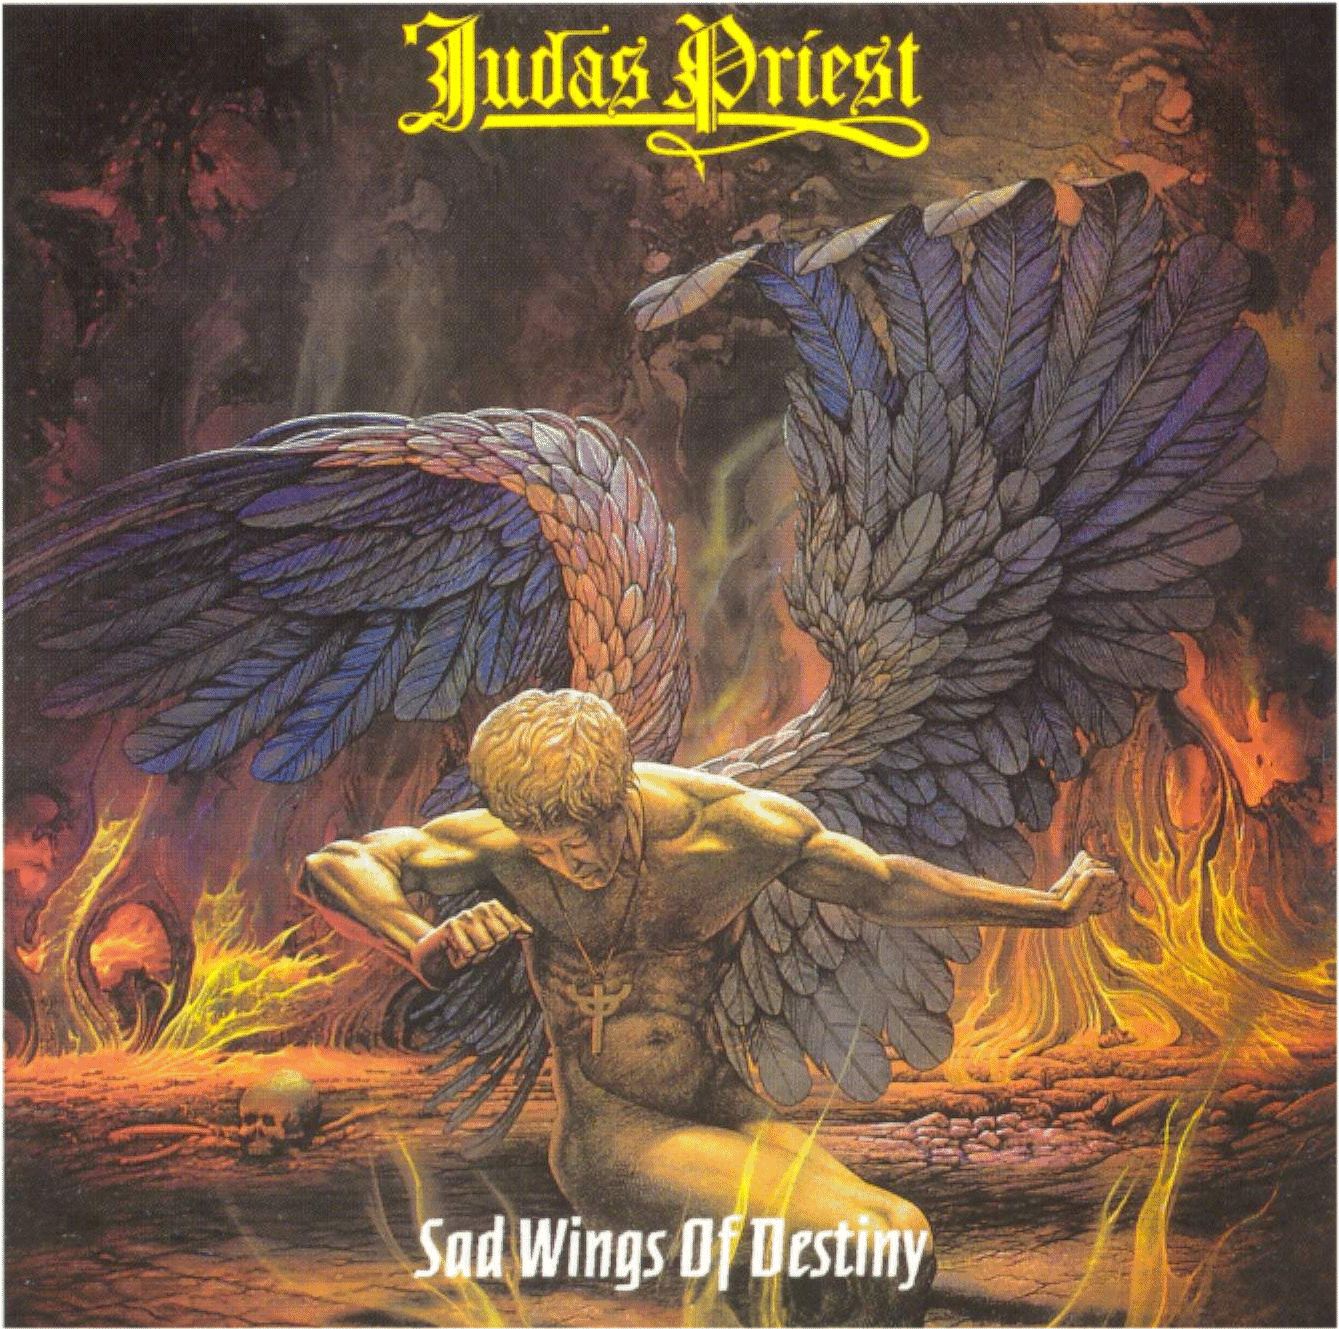 Click here to enter the official Judas Priest website.